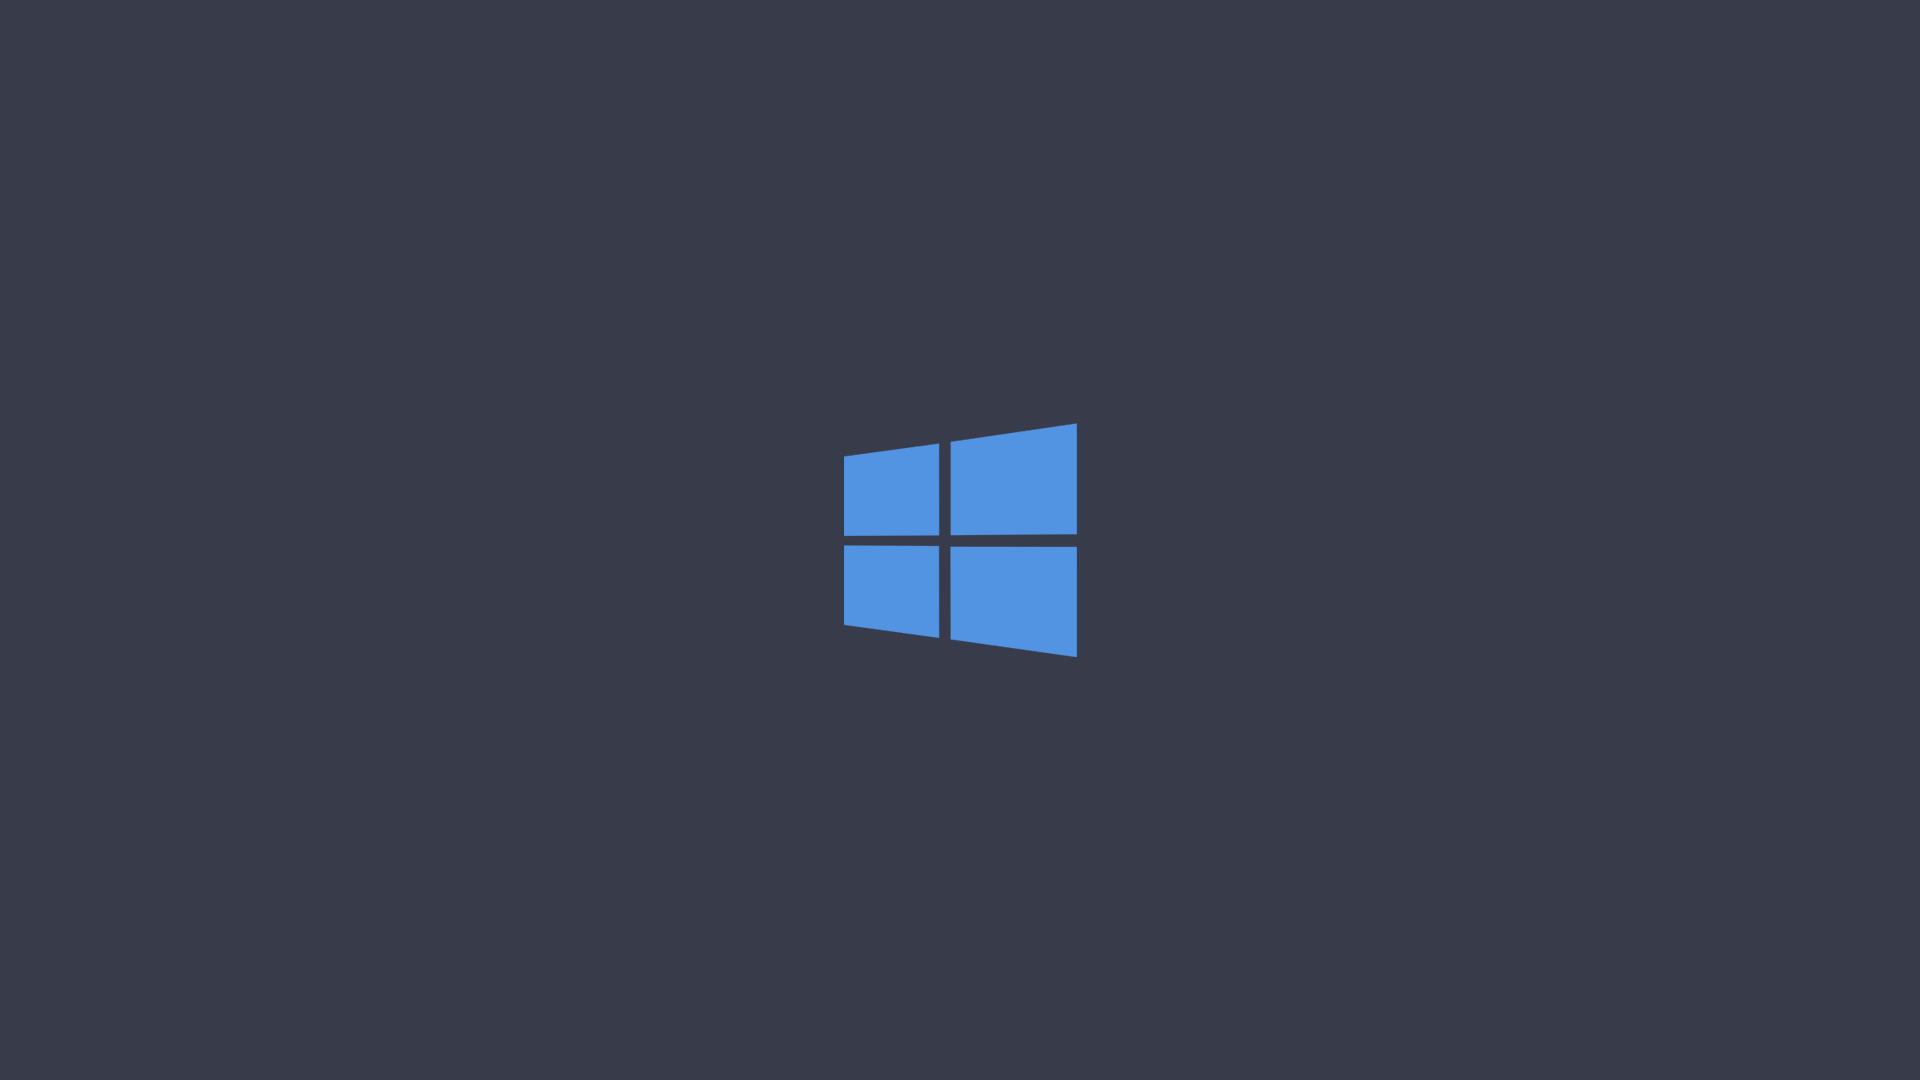 Windows-10-dark-arch-png by Rvstyz on DeviantArt